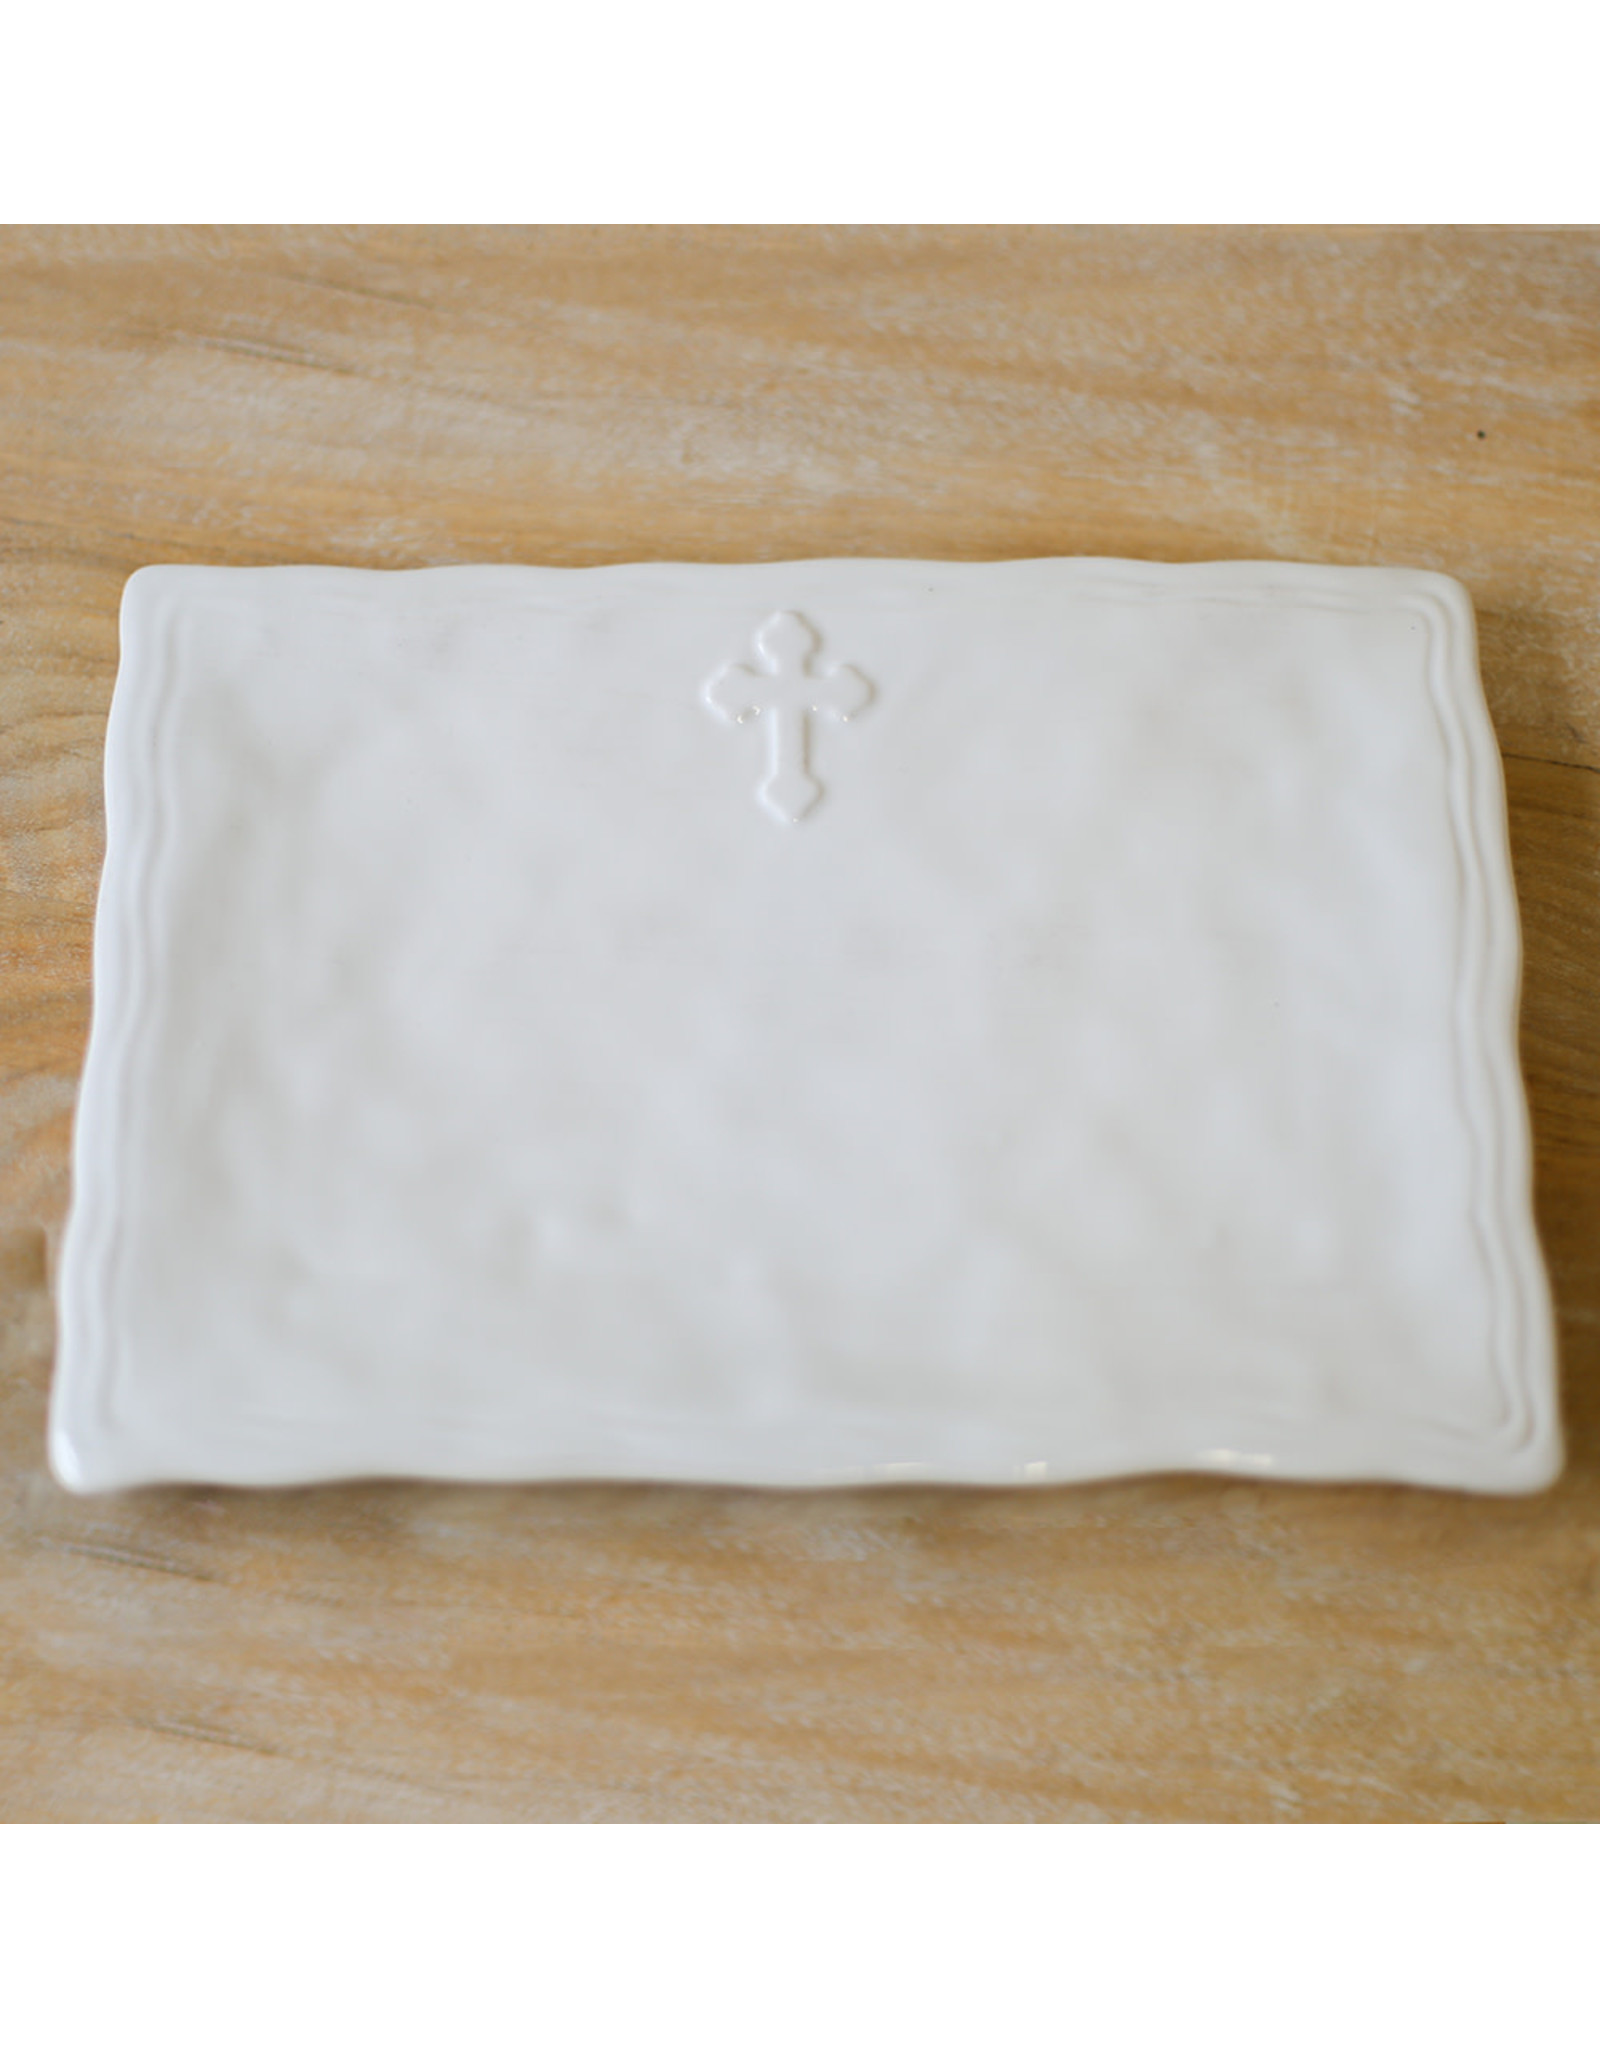 The Royal Standard Antique White Cross Platter,11.5x8.5